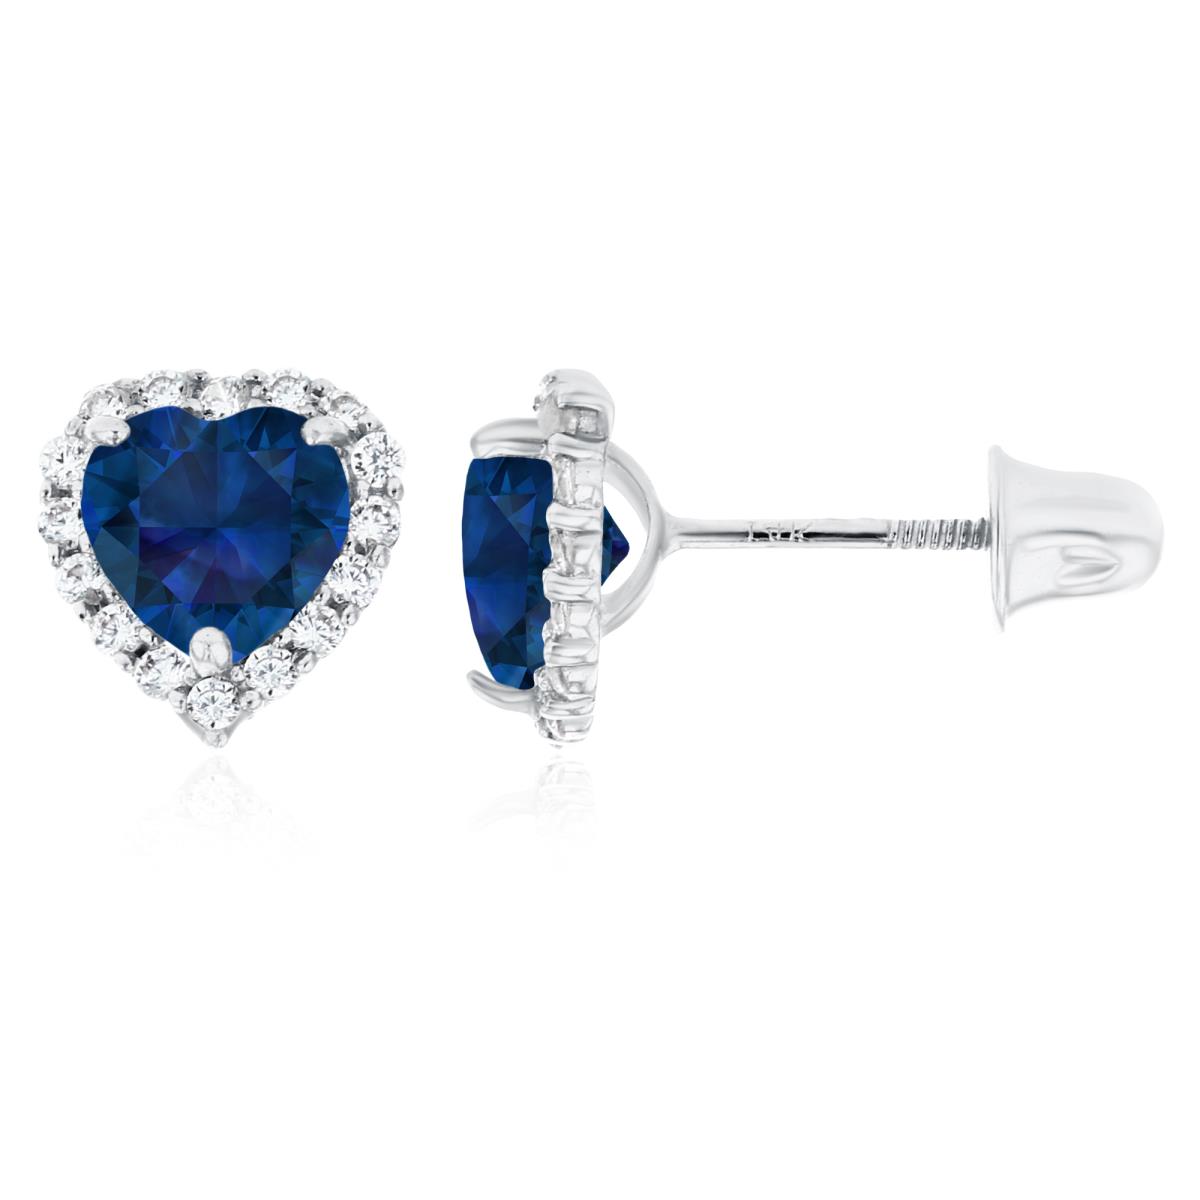 14K White Gold 5mm Heart Created Blue Sapphire & 1mm Created White Sapphire Halo Screwback Earrings